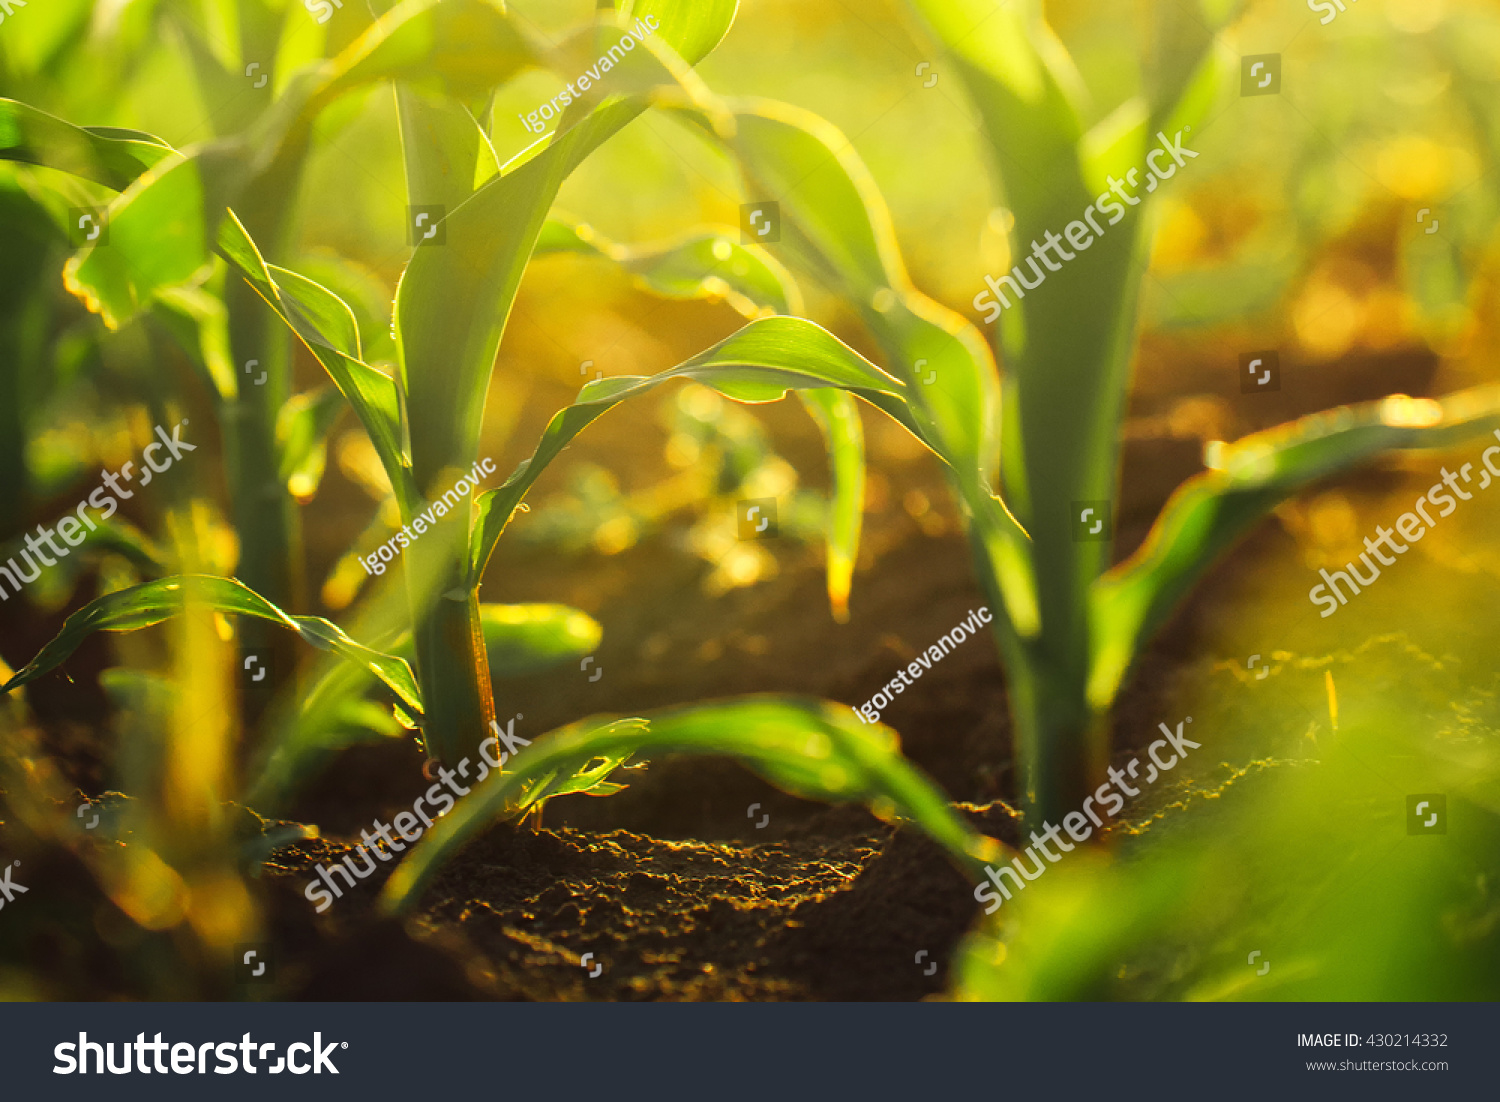 Corn crops growing in field, sunlight flare, selective focus #430214332